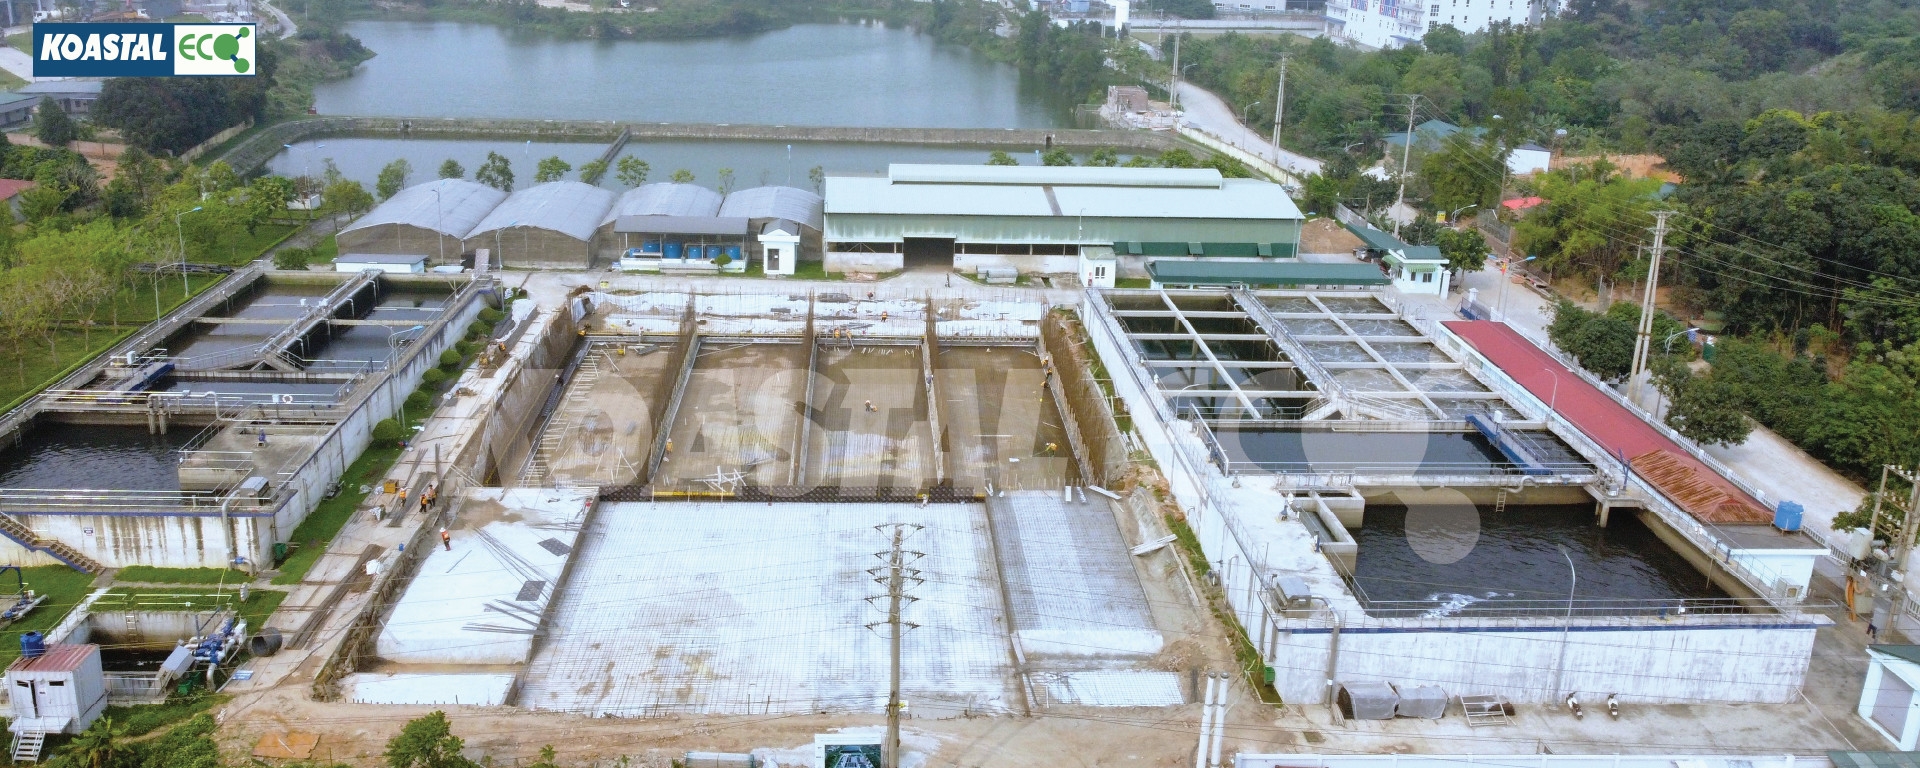 Khai Quang 工业区之废水集中处理厂